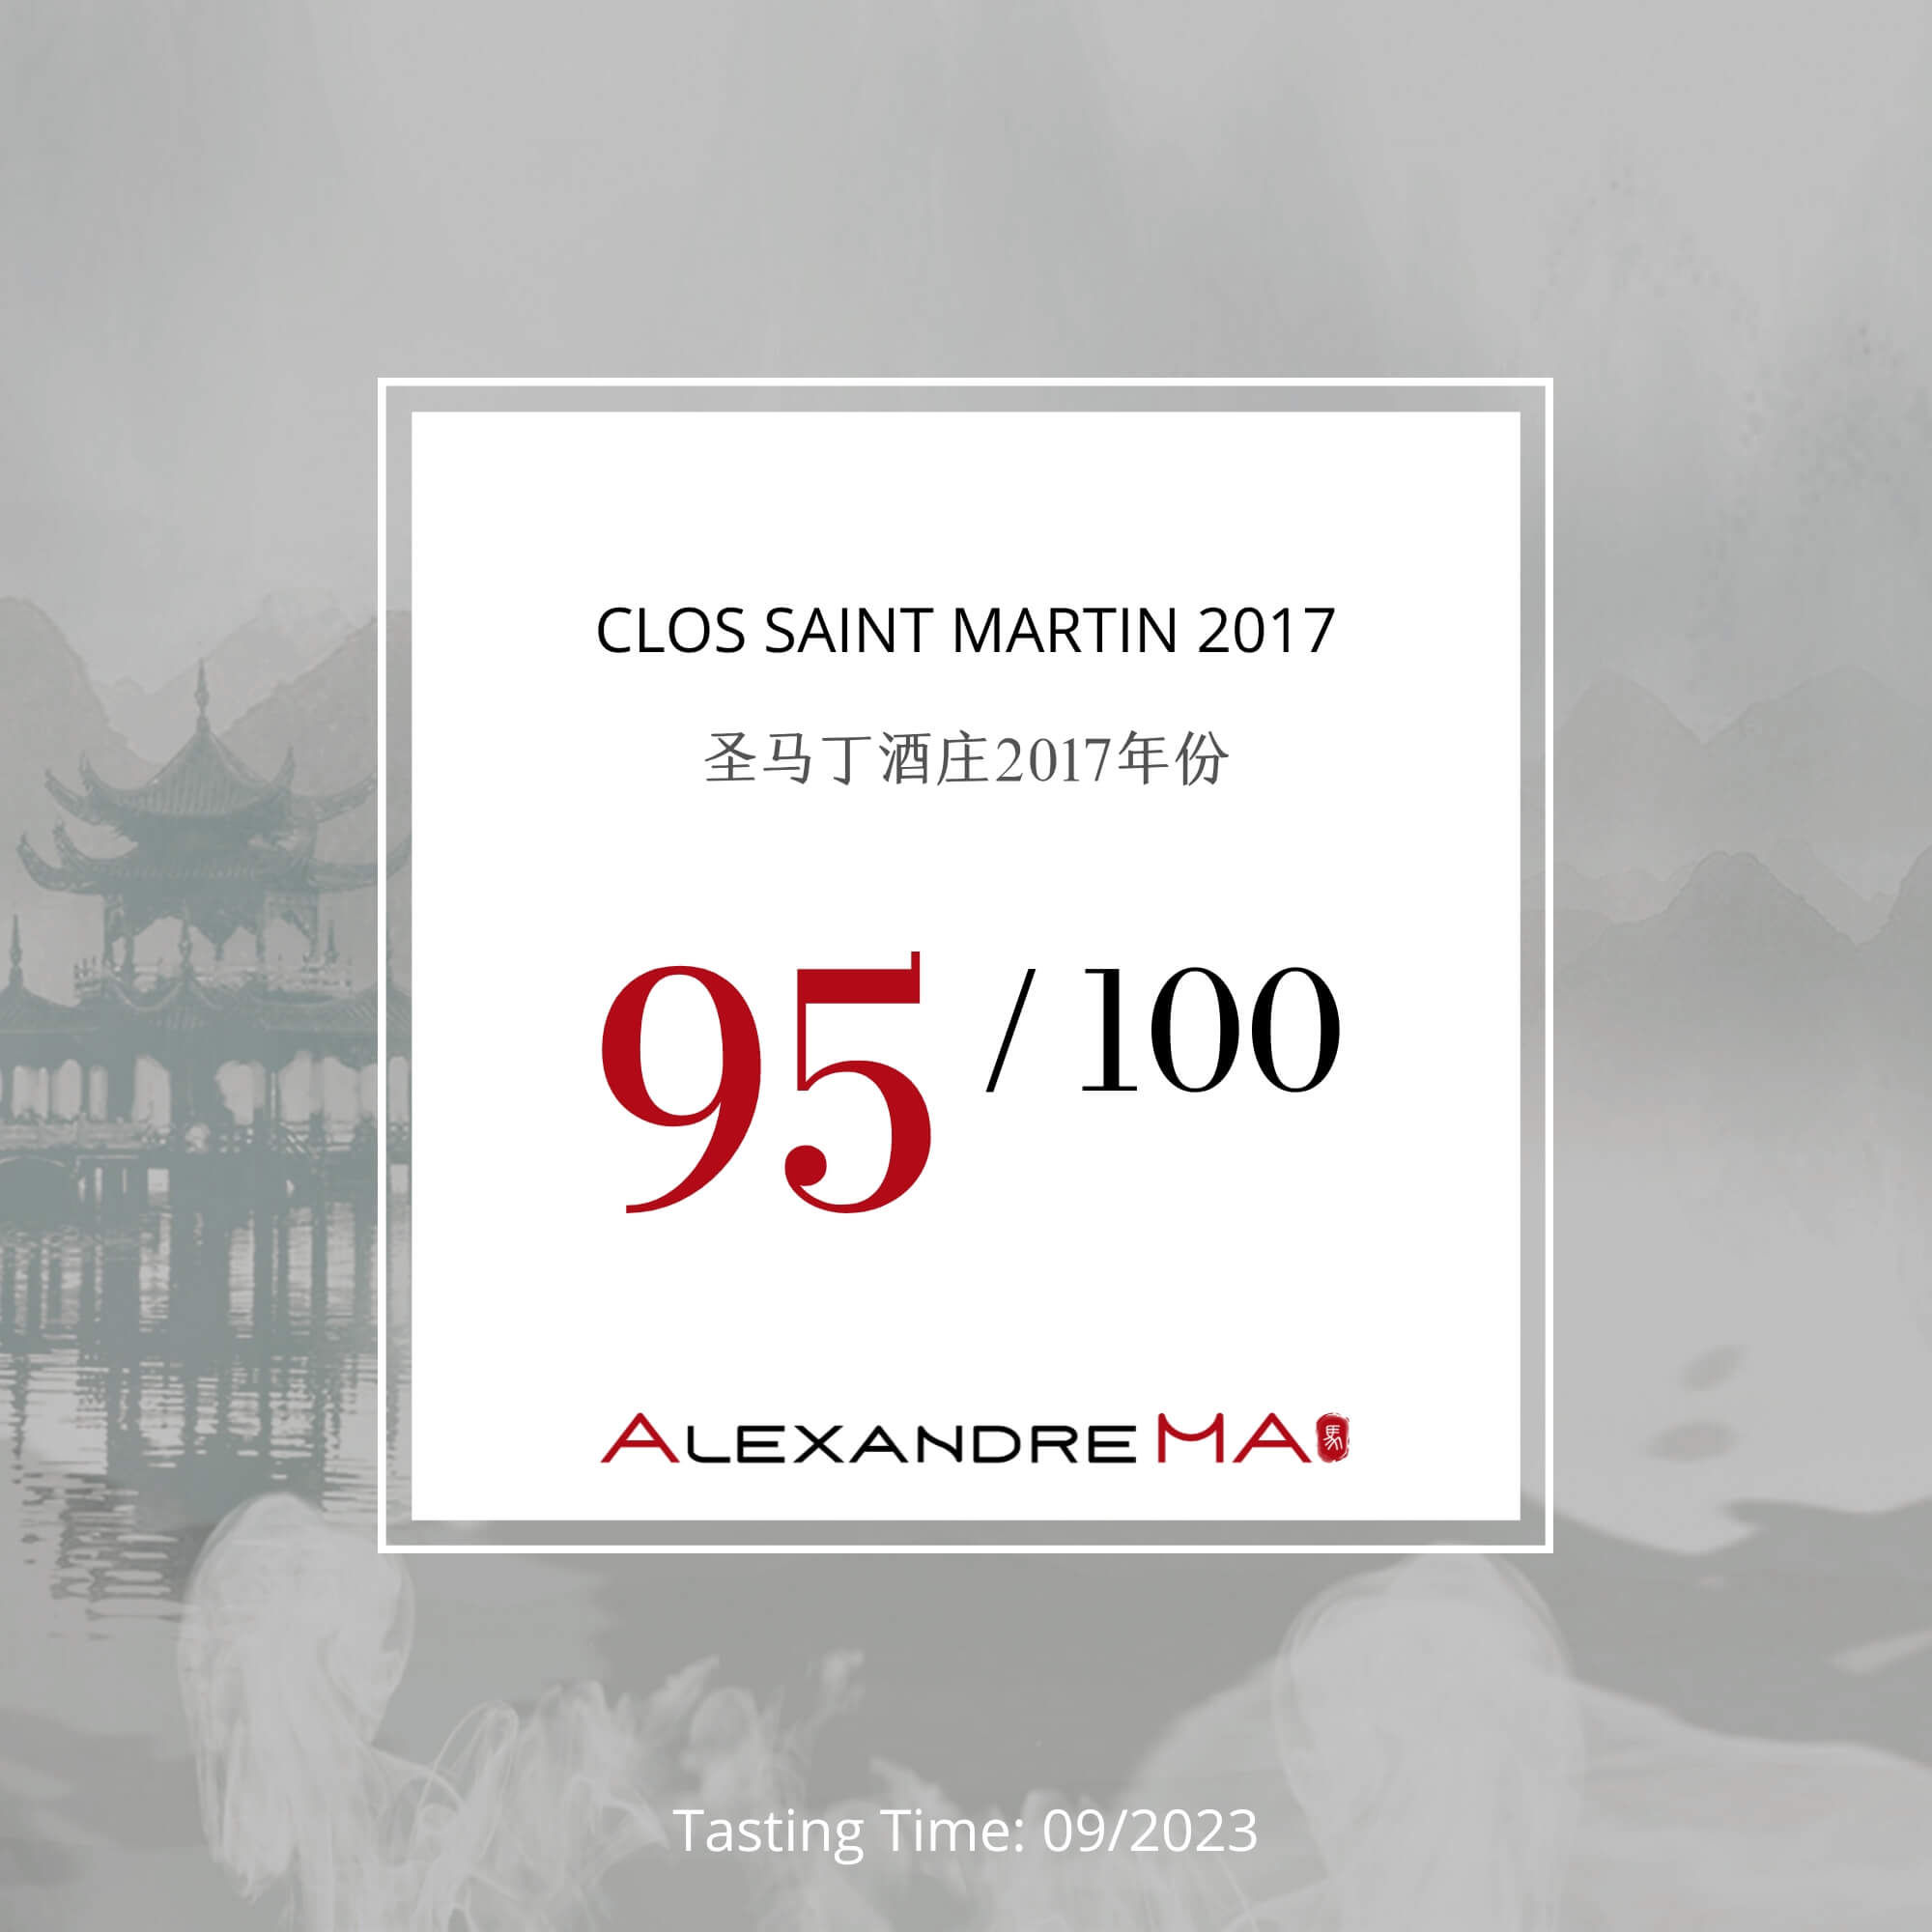 Clos Saint Martin 2017 - Alexandre MA